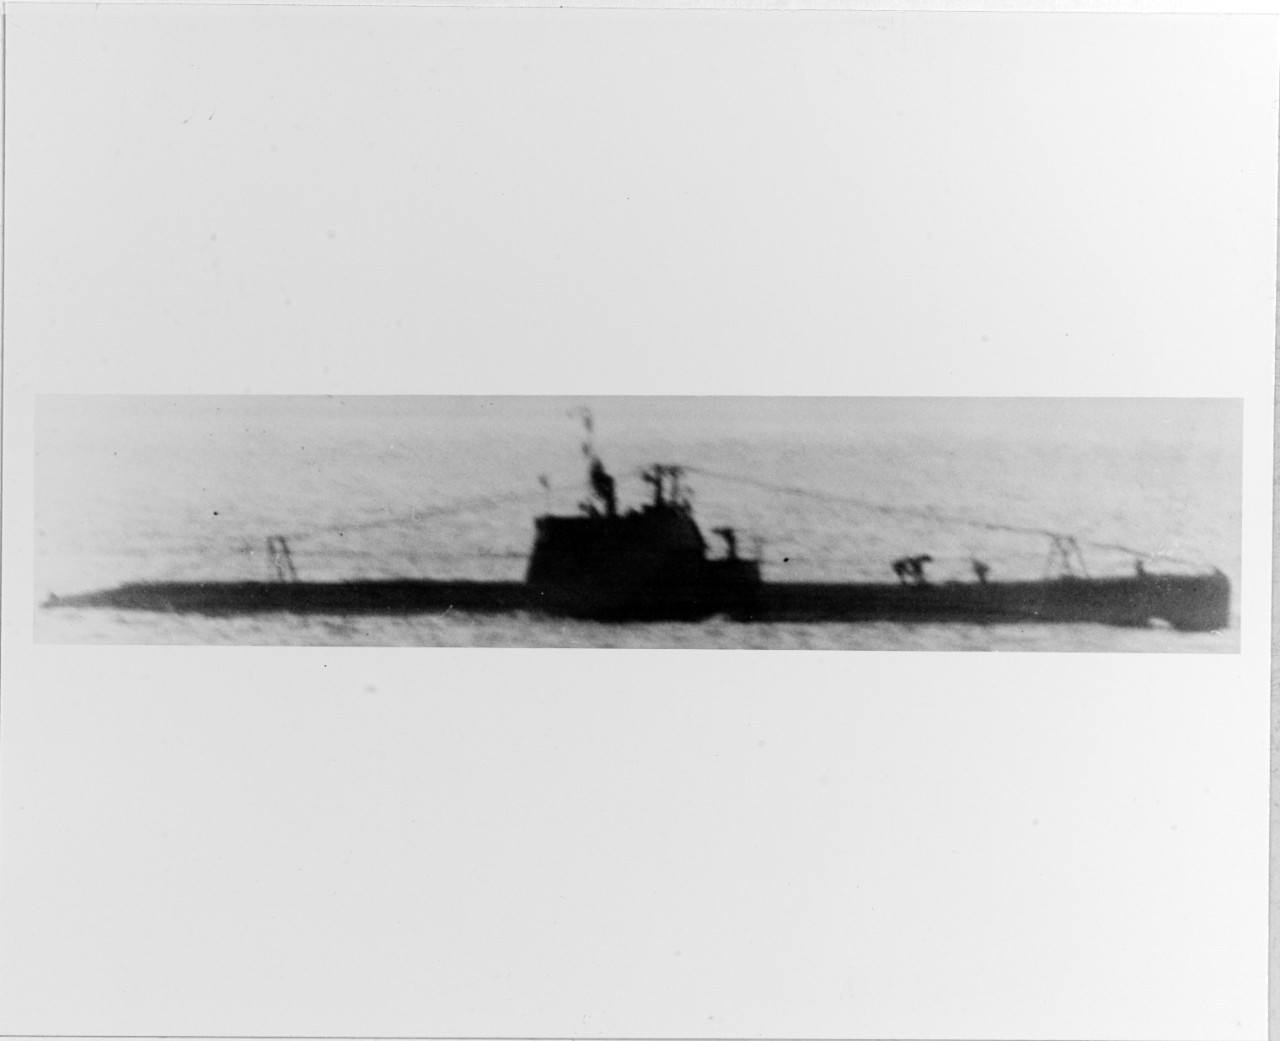 SHCH-303 (Soviet Submarine, 1931-circa 1958)